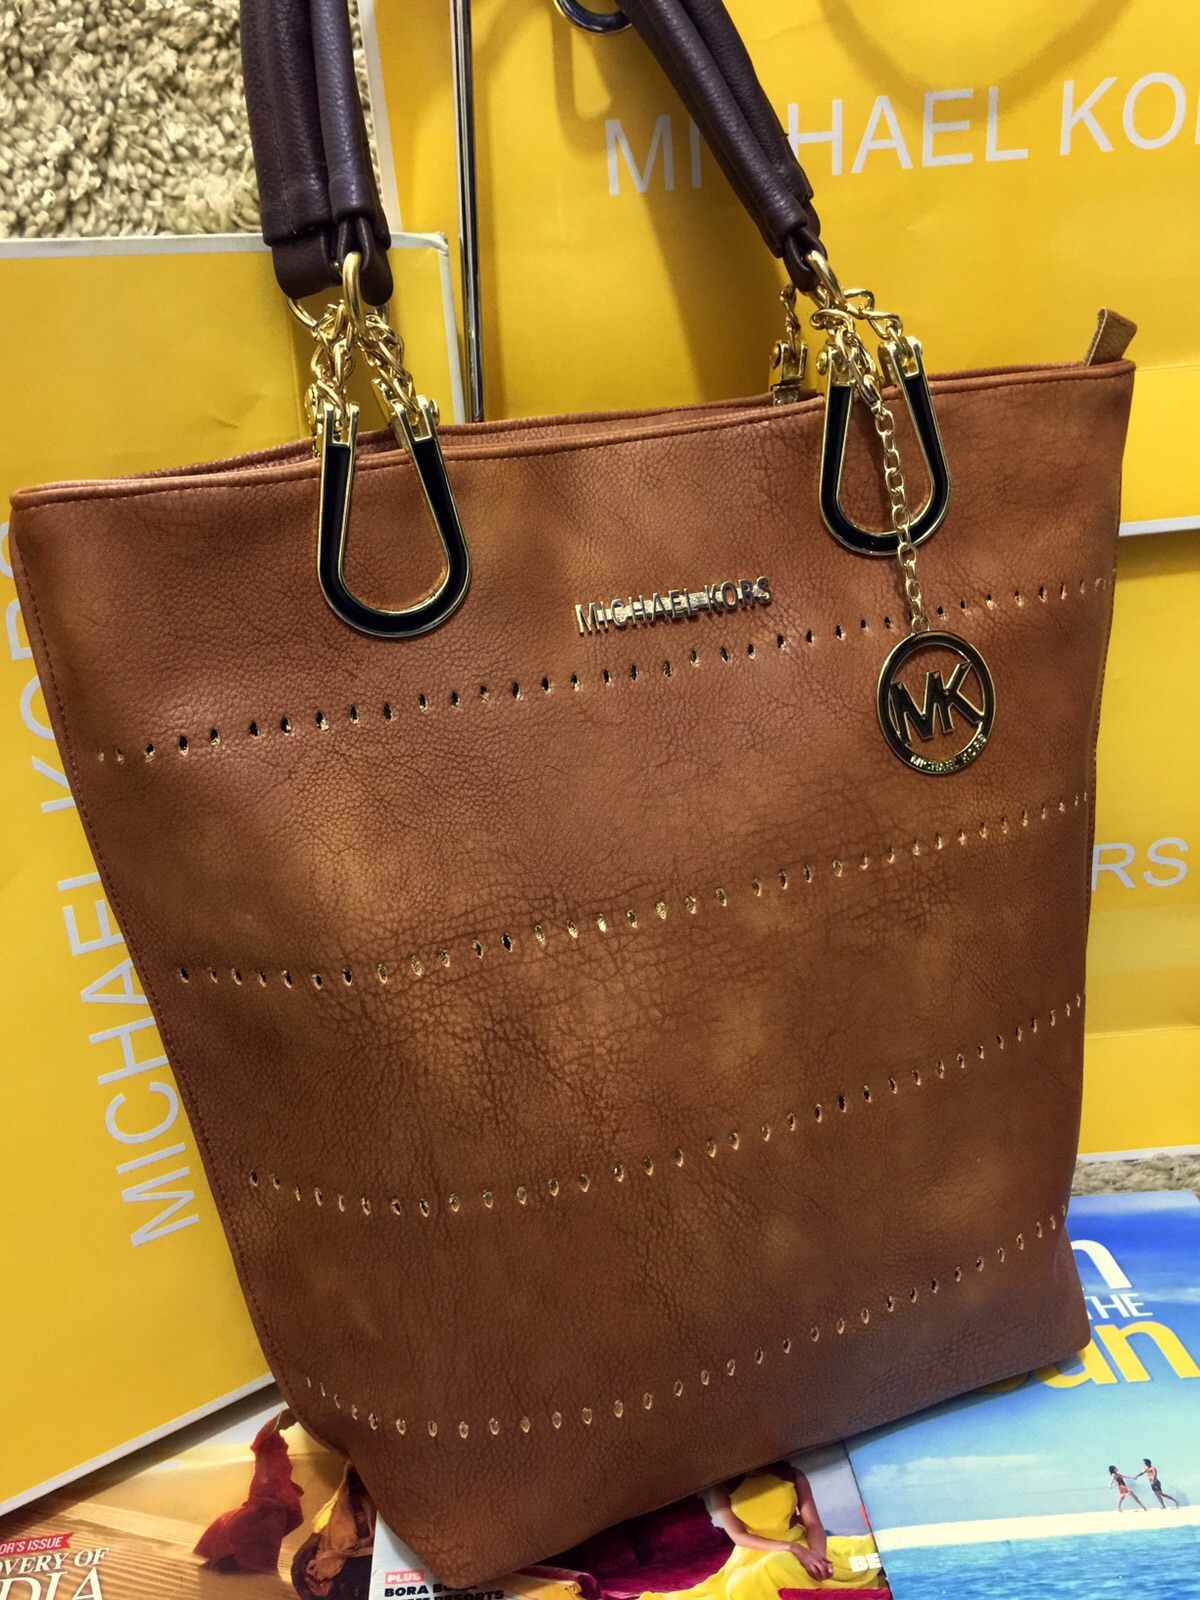 Handbags Adjustable Michael Kors Handbag, For Office, Size: H-9inch  W-12inch at Rs 1700/bag in Mumbai